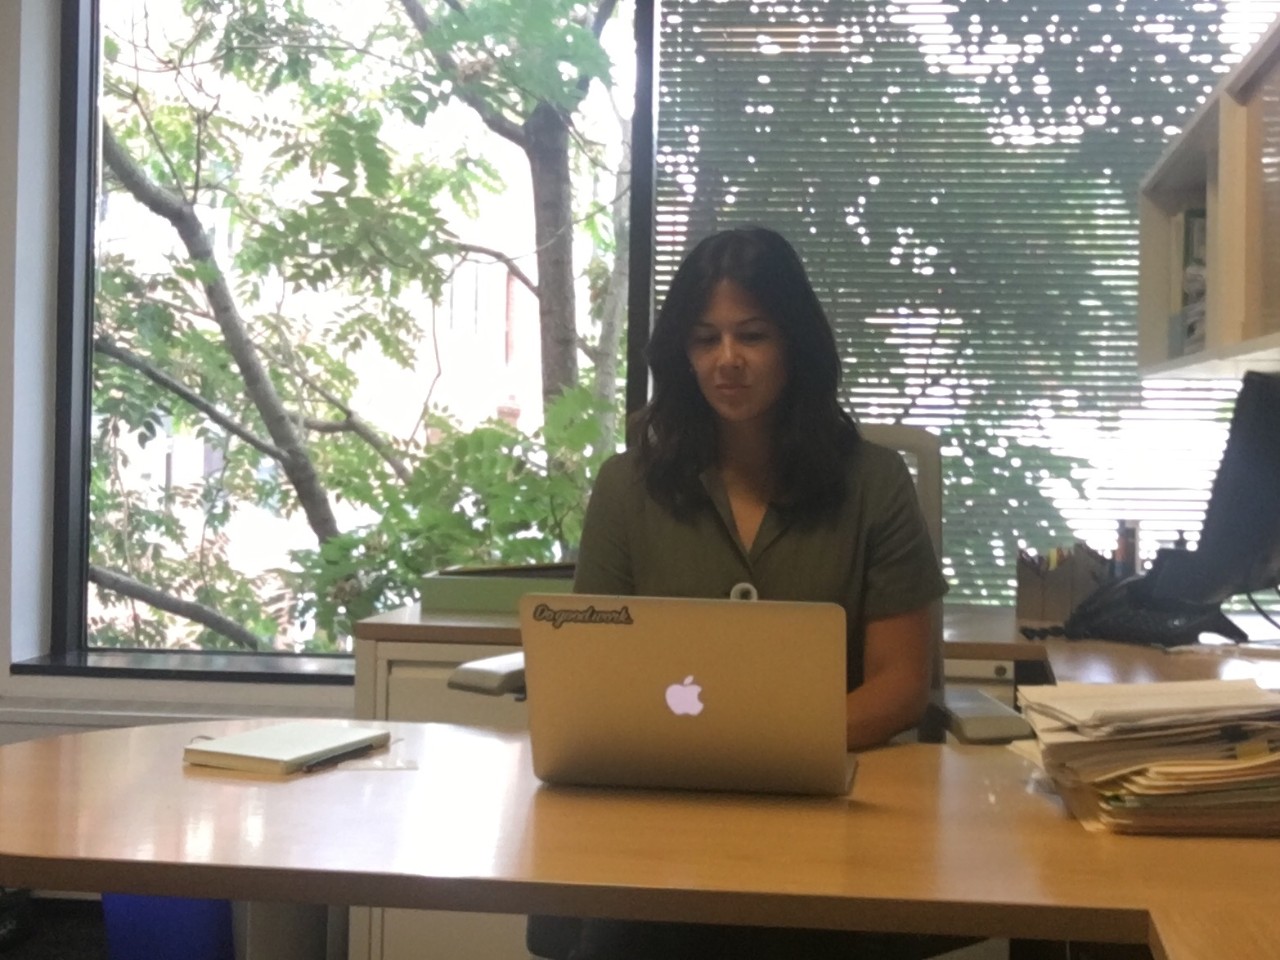 Kim Castro sitting at her desk, working on her Apple MacBook laptop.